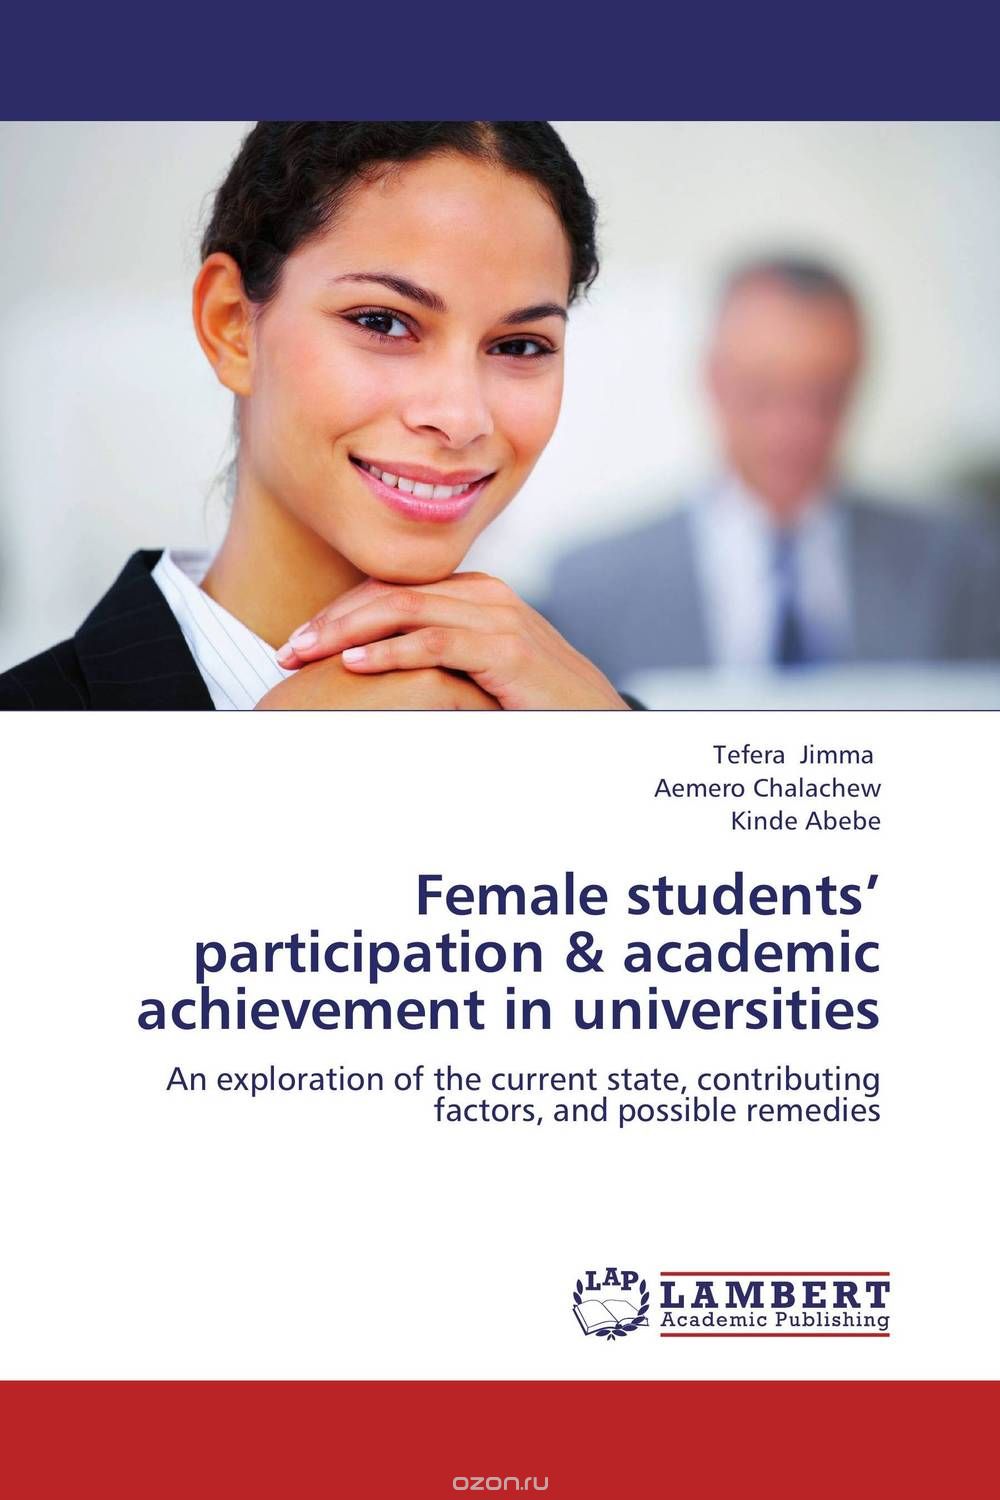 Скачать книгу "Female students’ participation & academic achievement in universities"